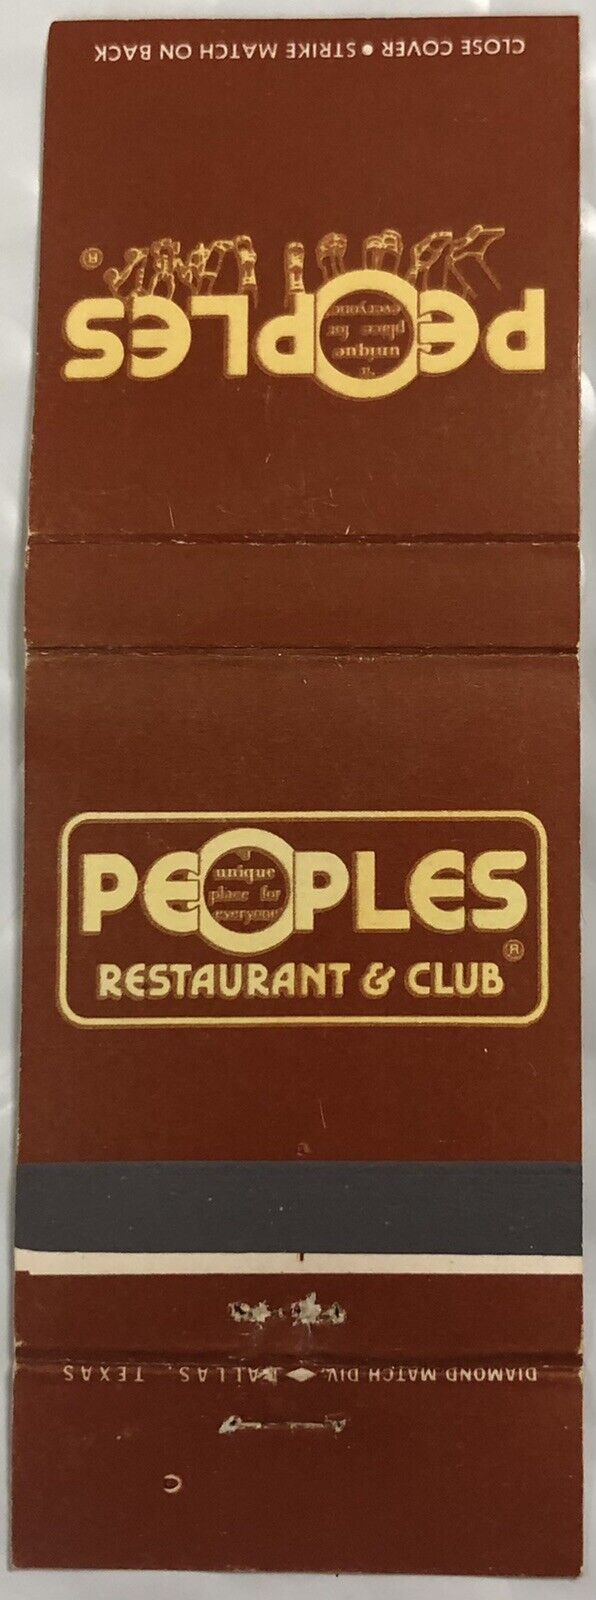 Vintage 20 Strike Matchbook Cover - Peoples Restaurant & Club